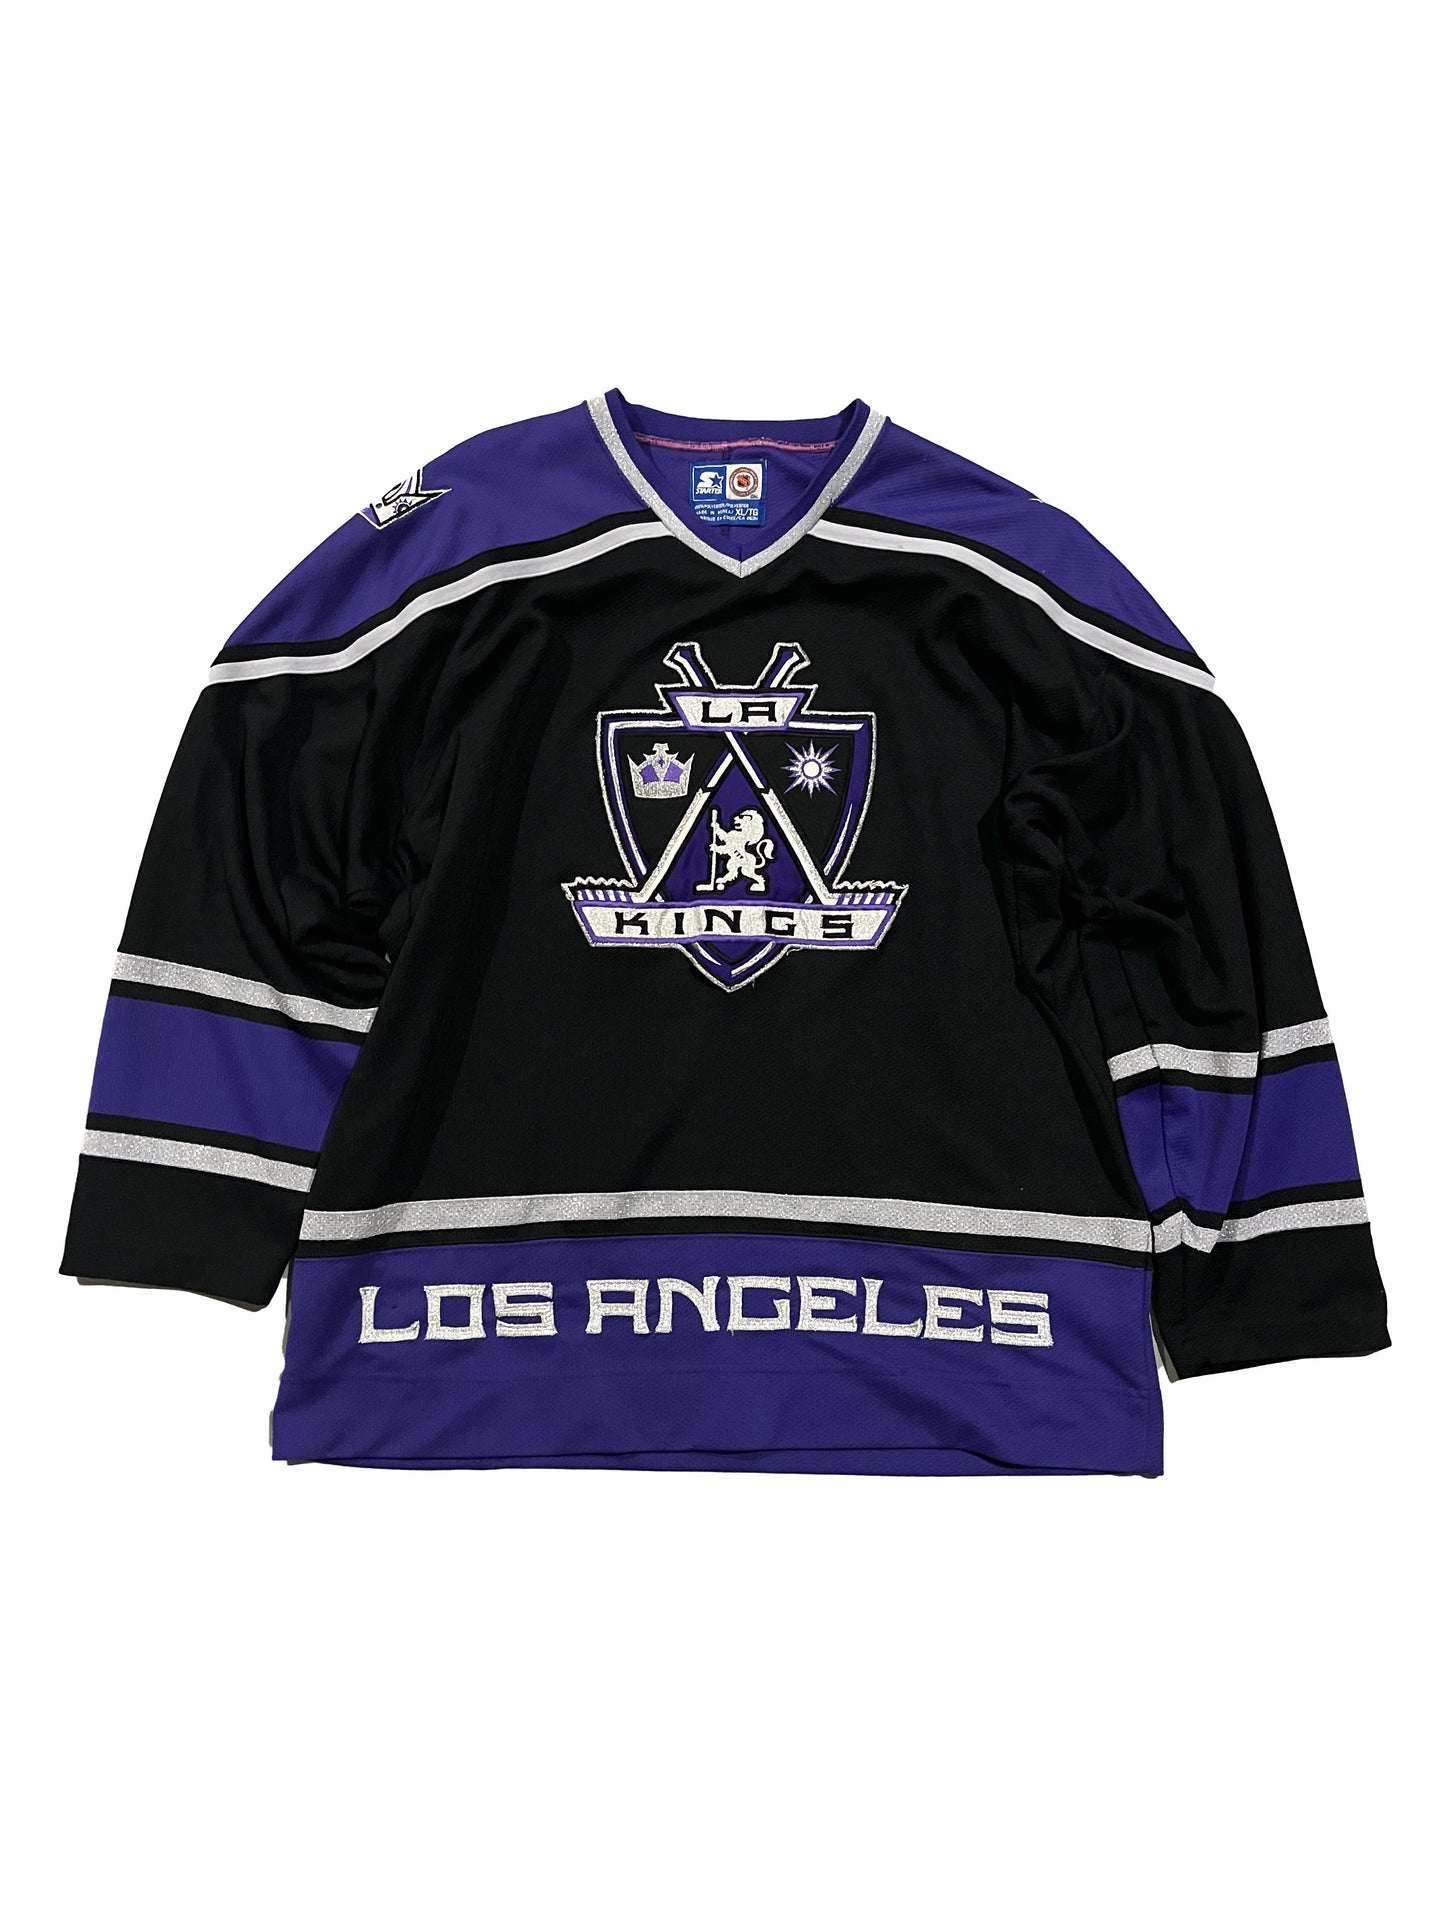 Vintage Starter Los Angeles Kings "Kyle 69" Hockey Jersey